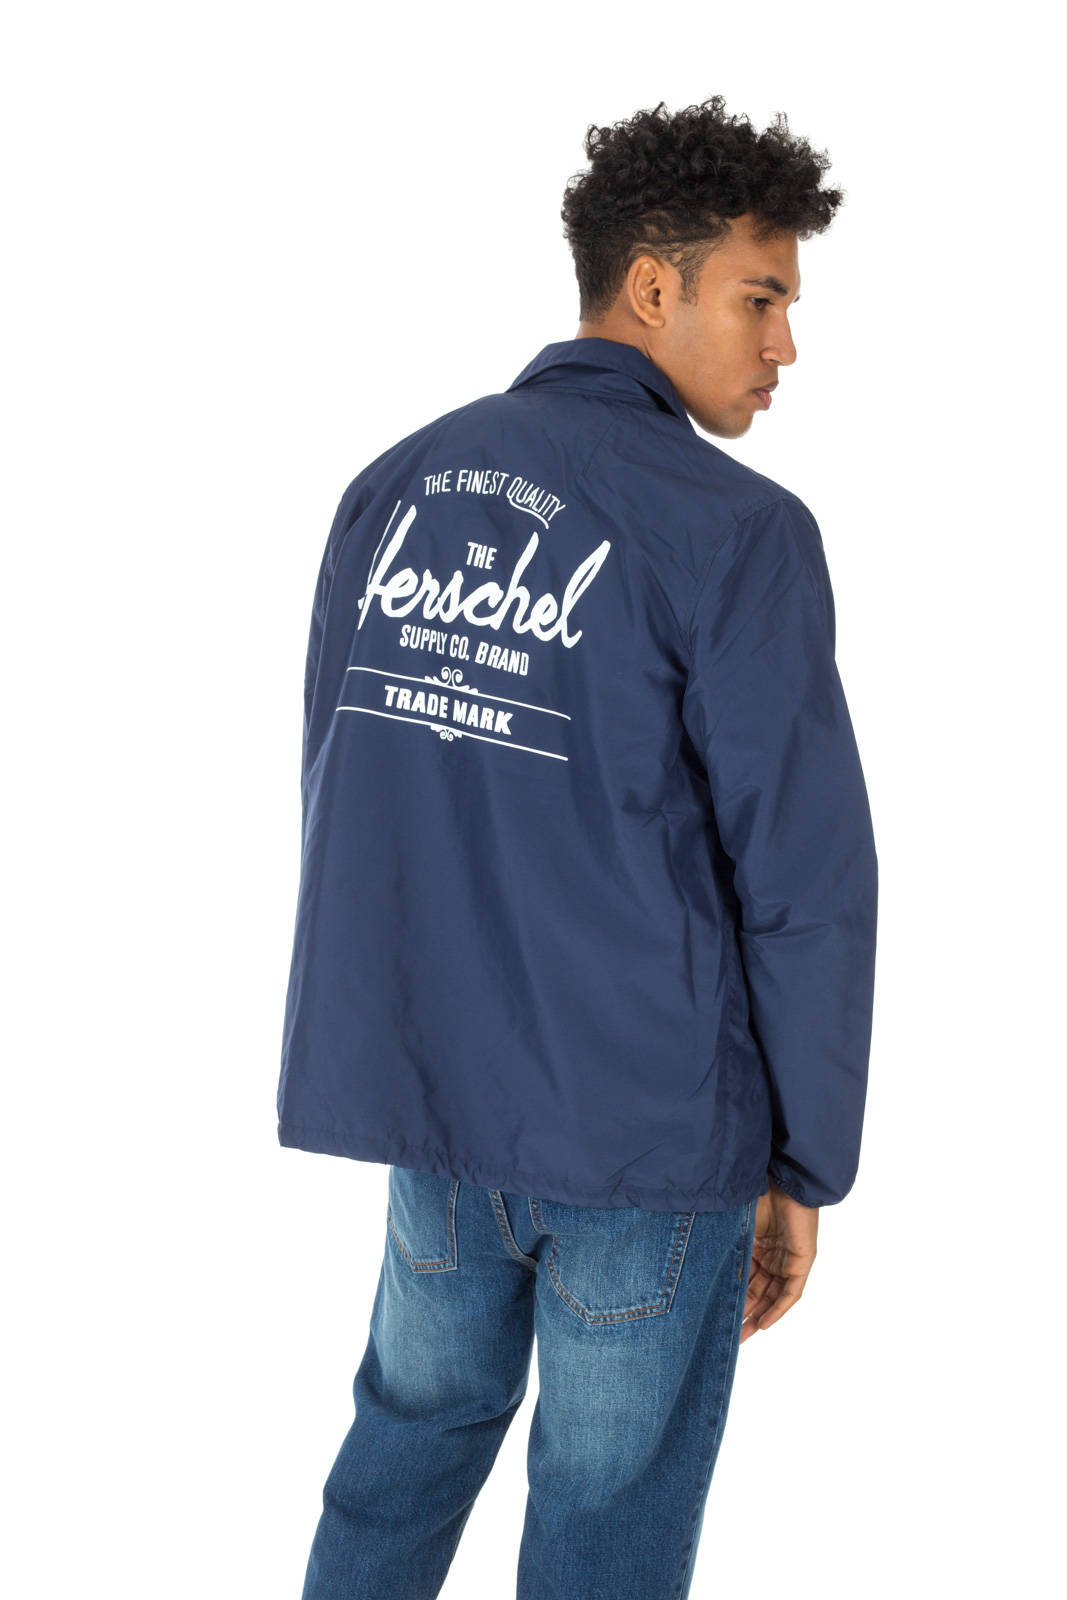 Herschel - Blue Coach Jacket